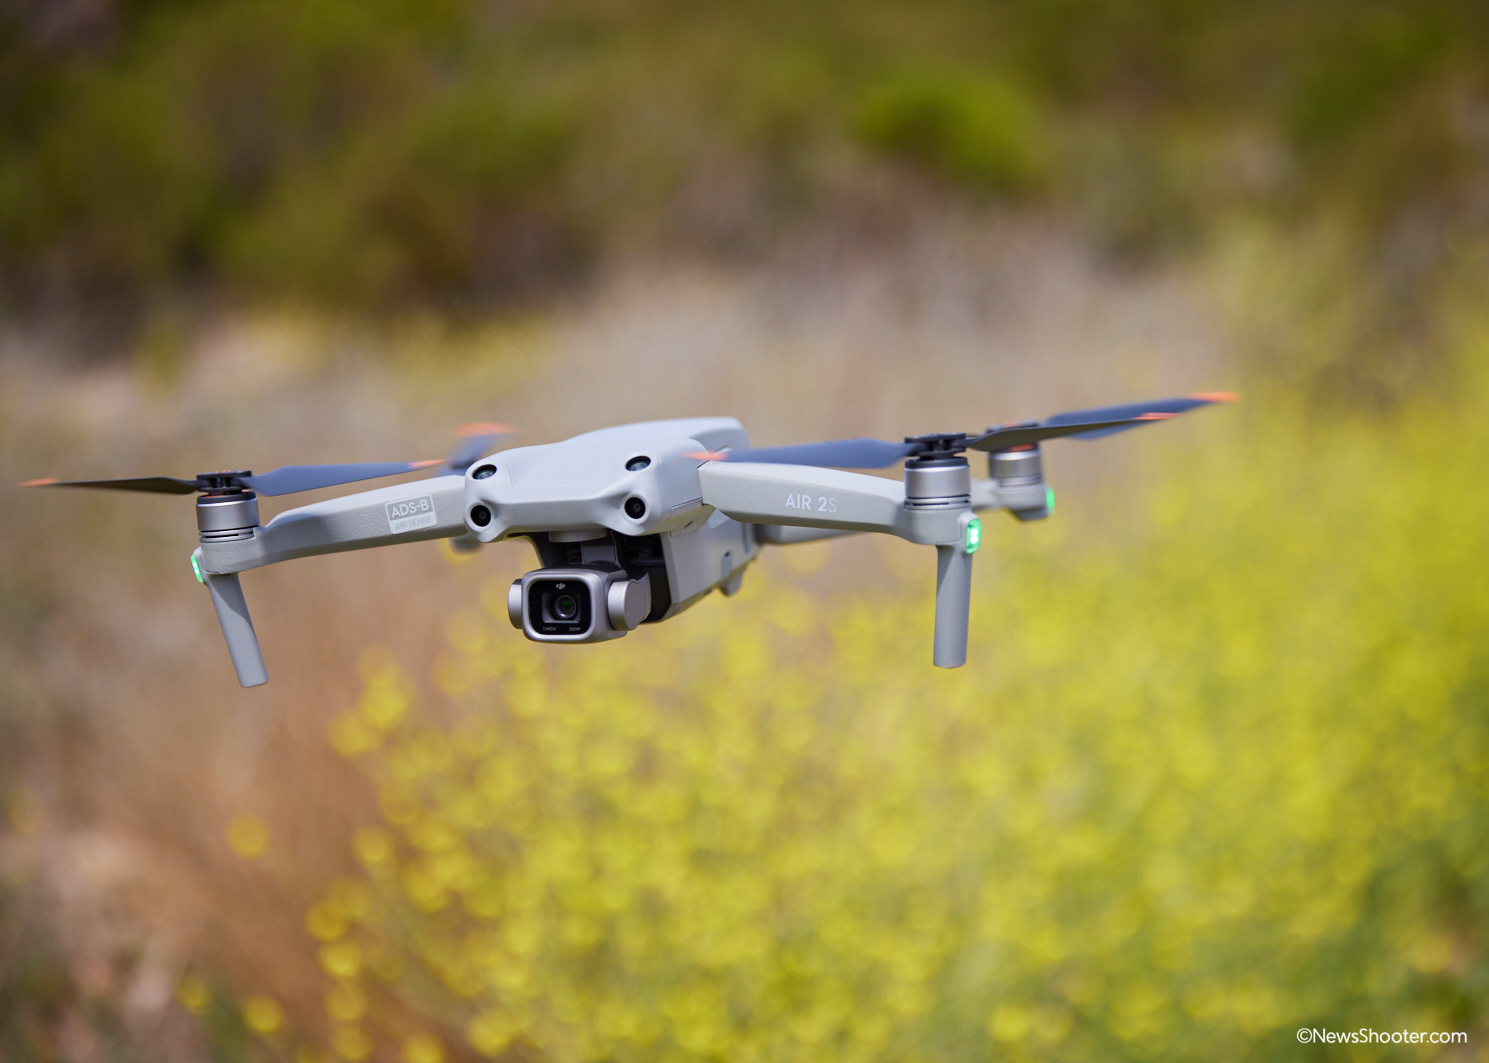 New DJI Air 2S Drone features a 1 sensor - Newsshooter